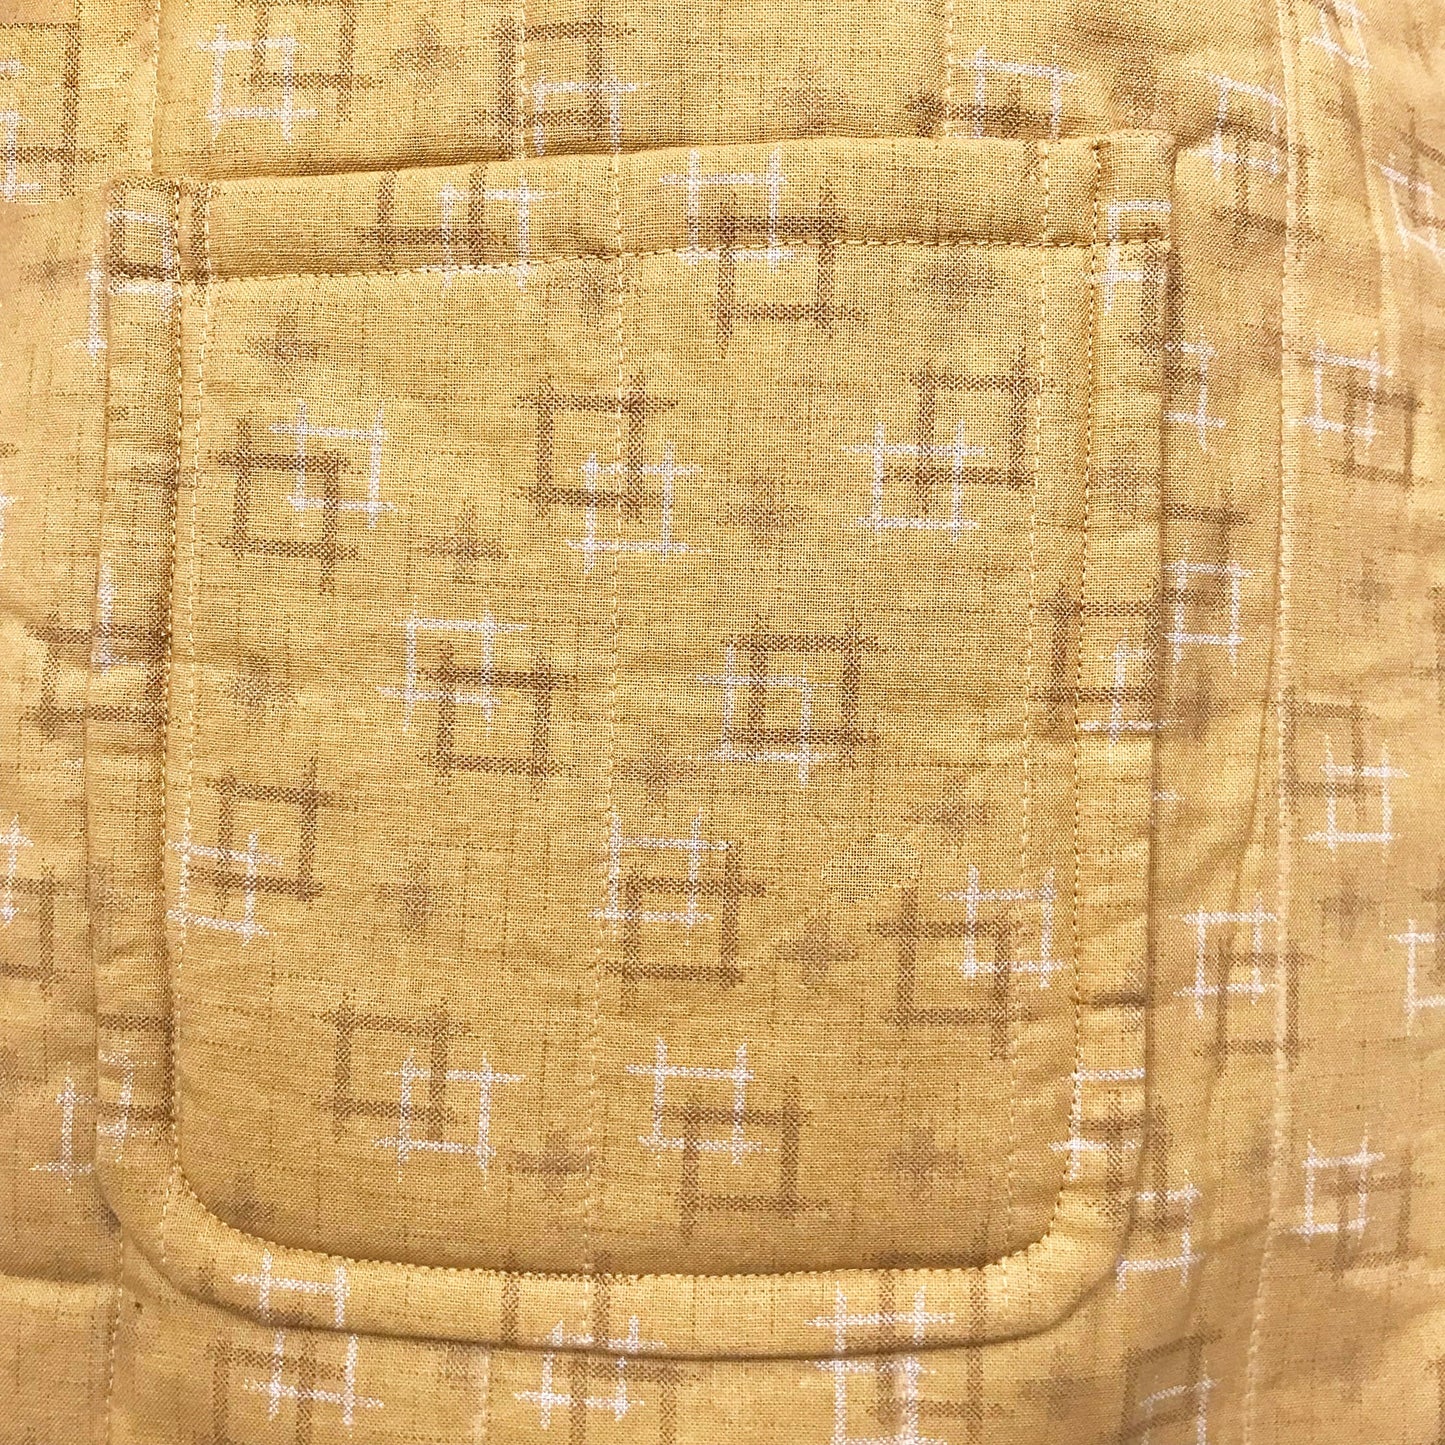 BIBI QUILTED JACKET sewing pattern